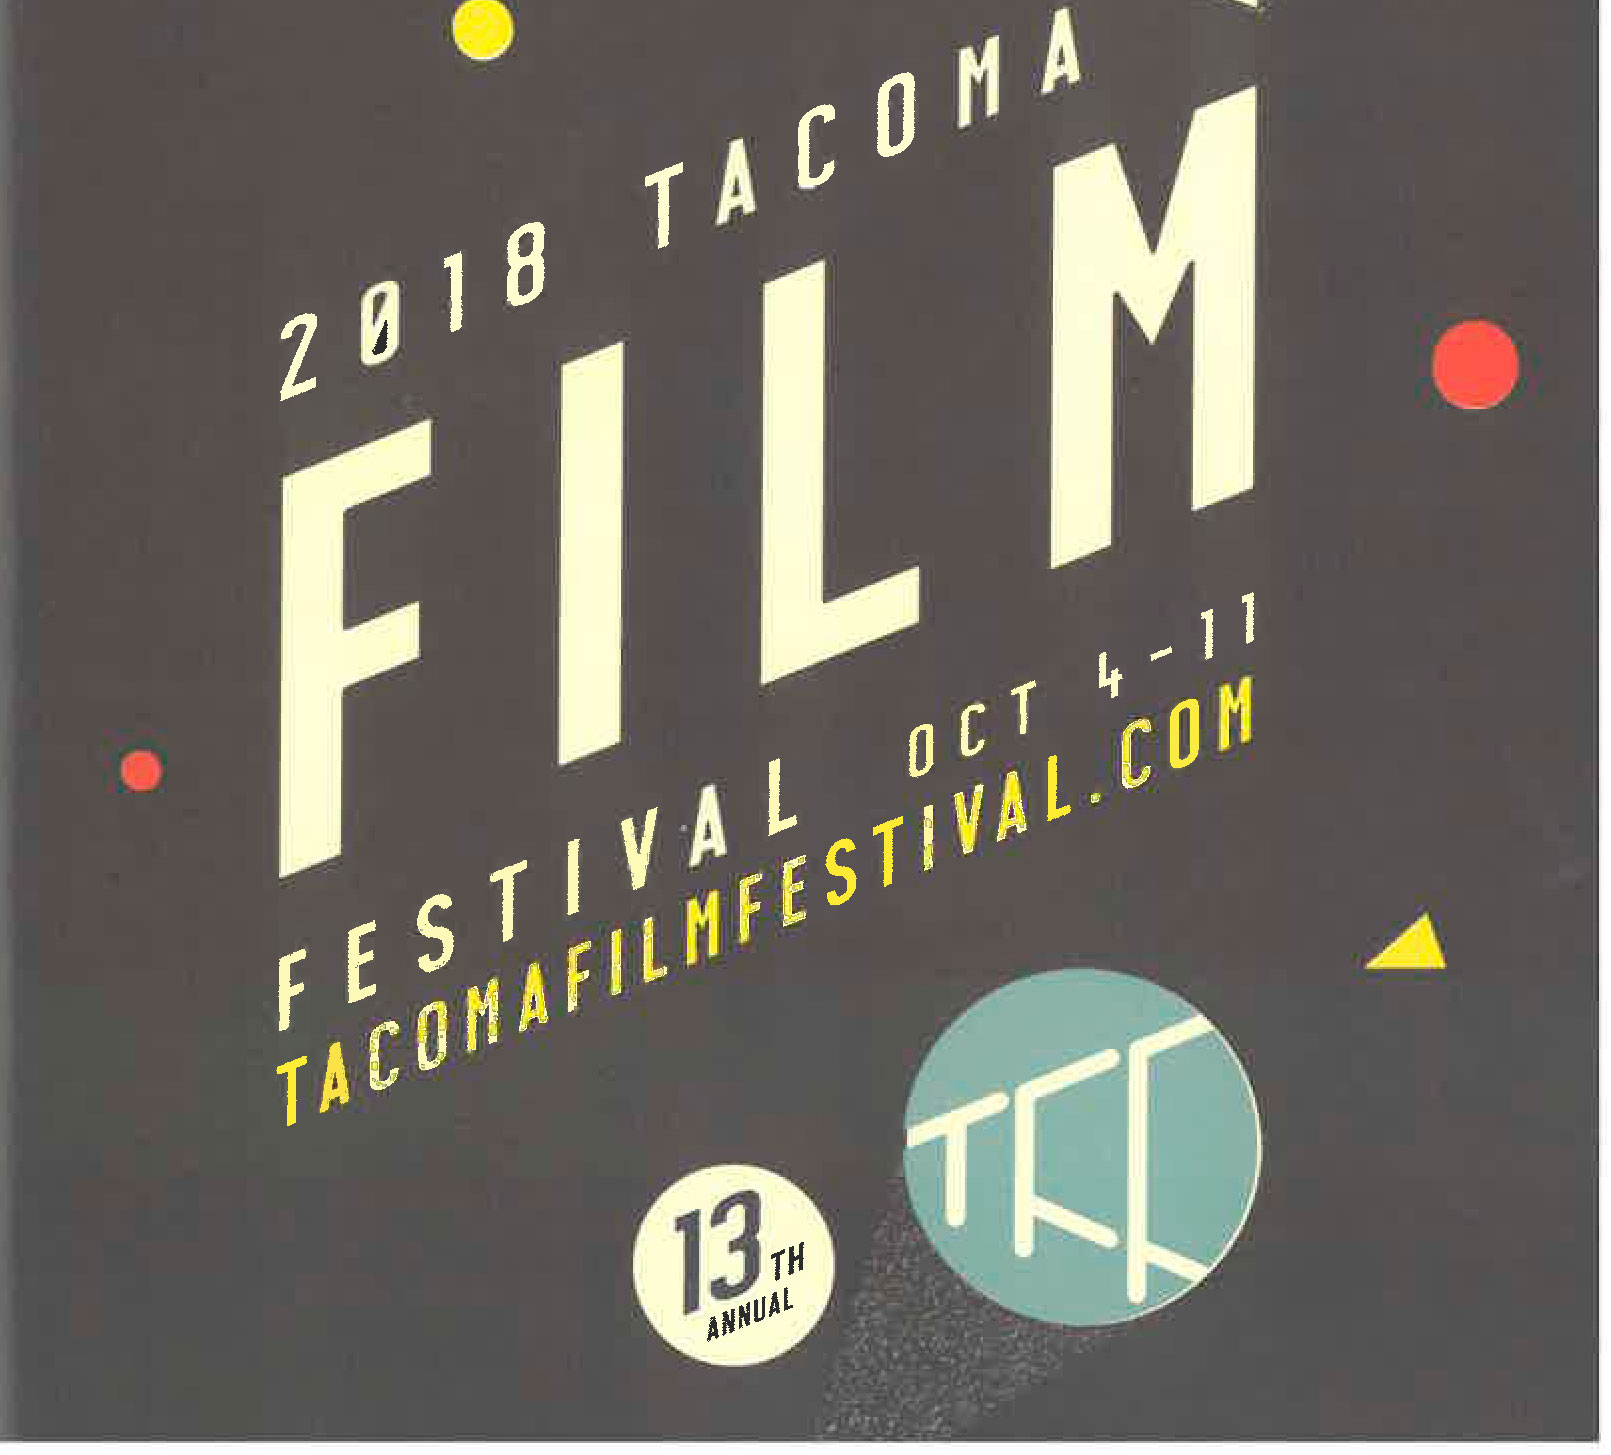 'Tis the season for The Tacoma Film Festival